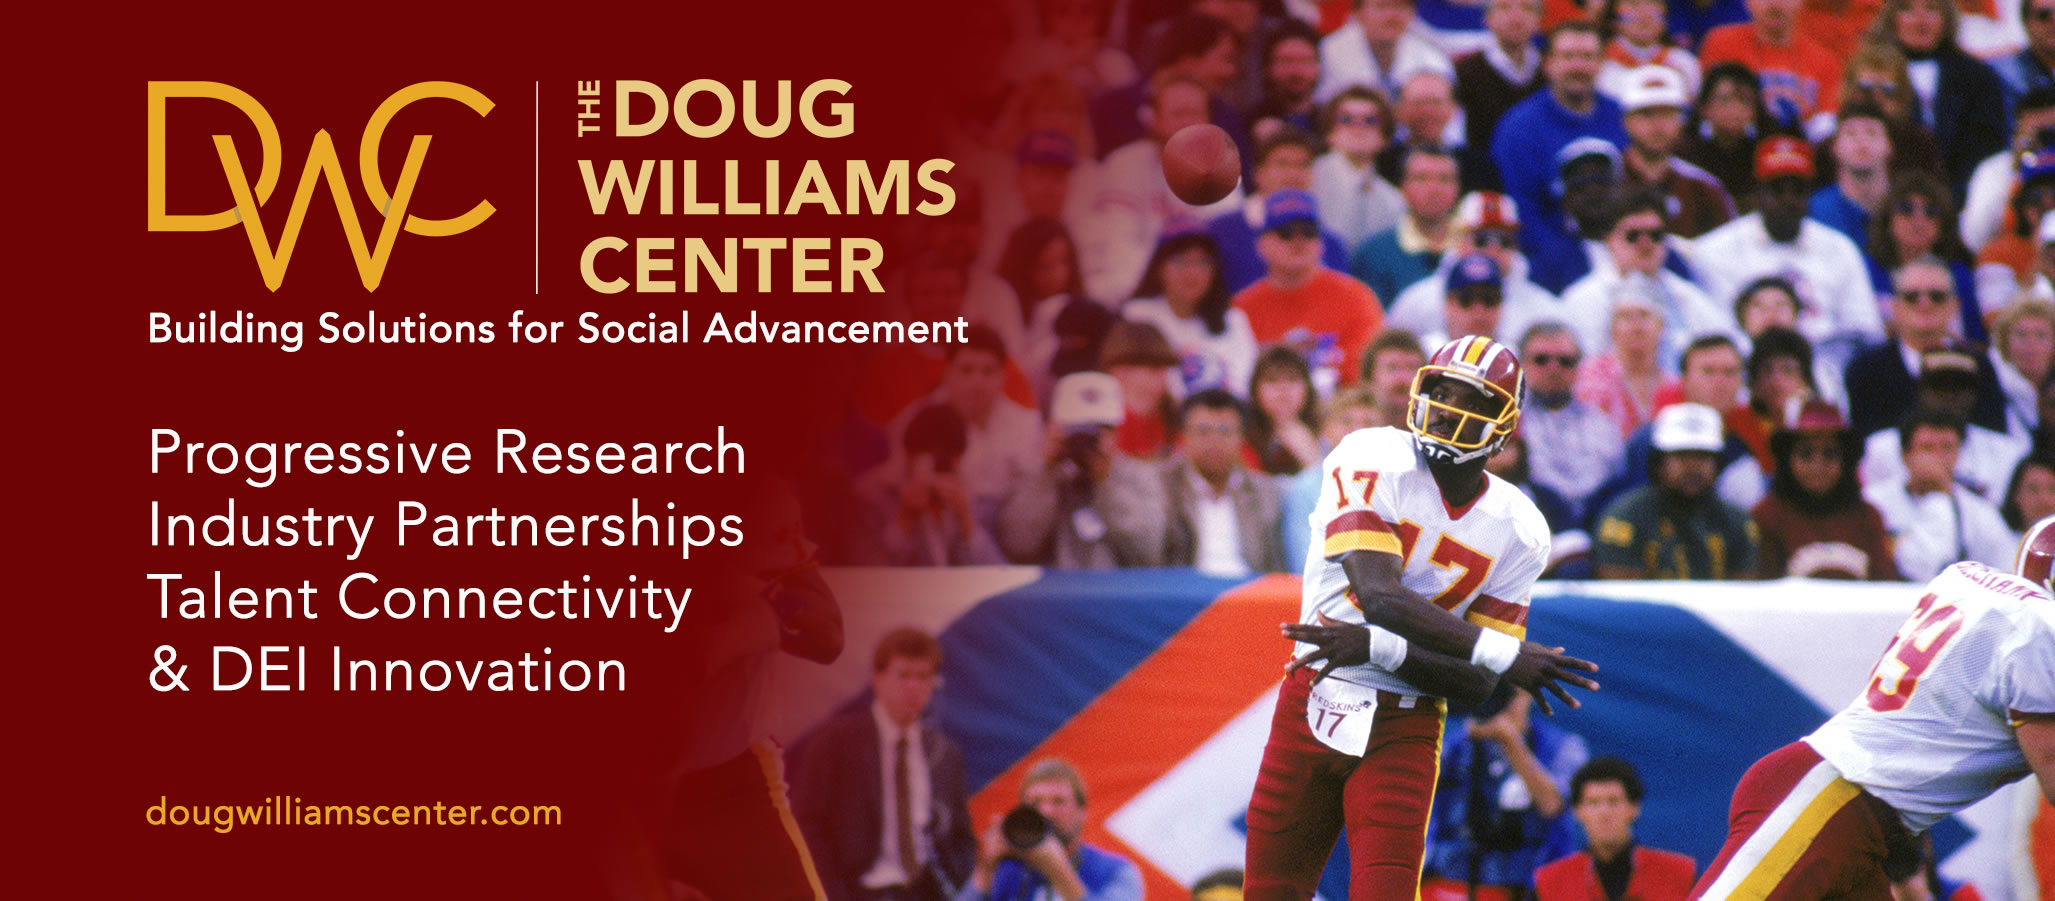 The Doug Williams Center - Building Solutions for Social Advancement. Progressive Research, Industry Partnerships, Talent Connectivity, & DEI Innovation. dougwilliamscenter.com